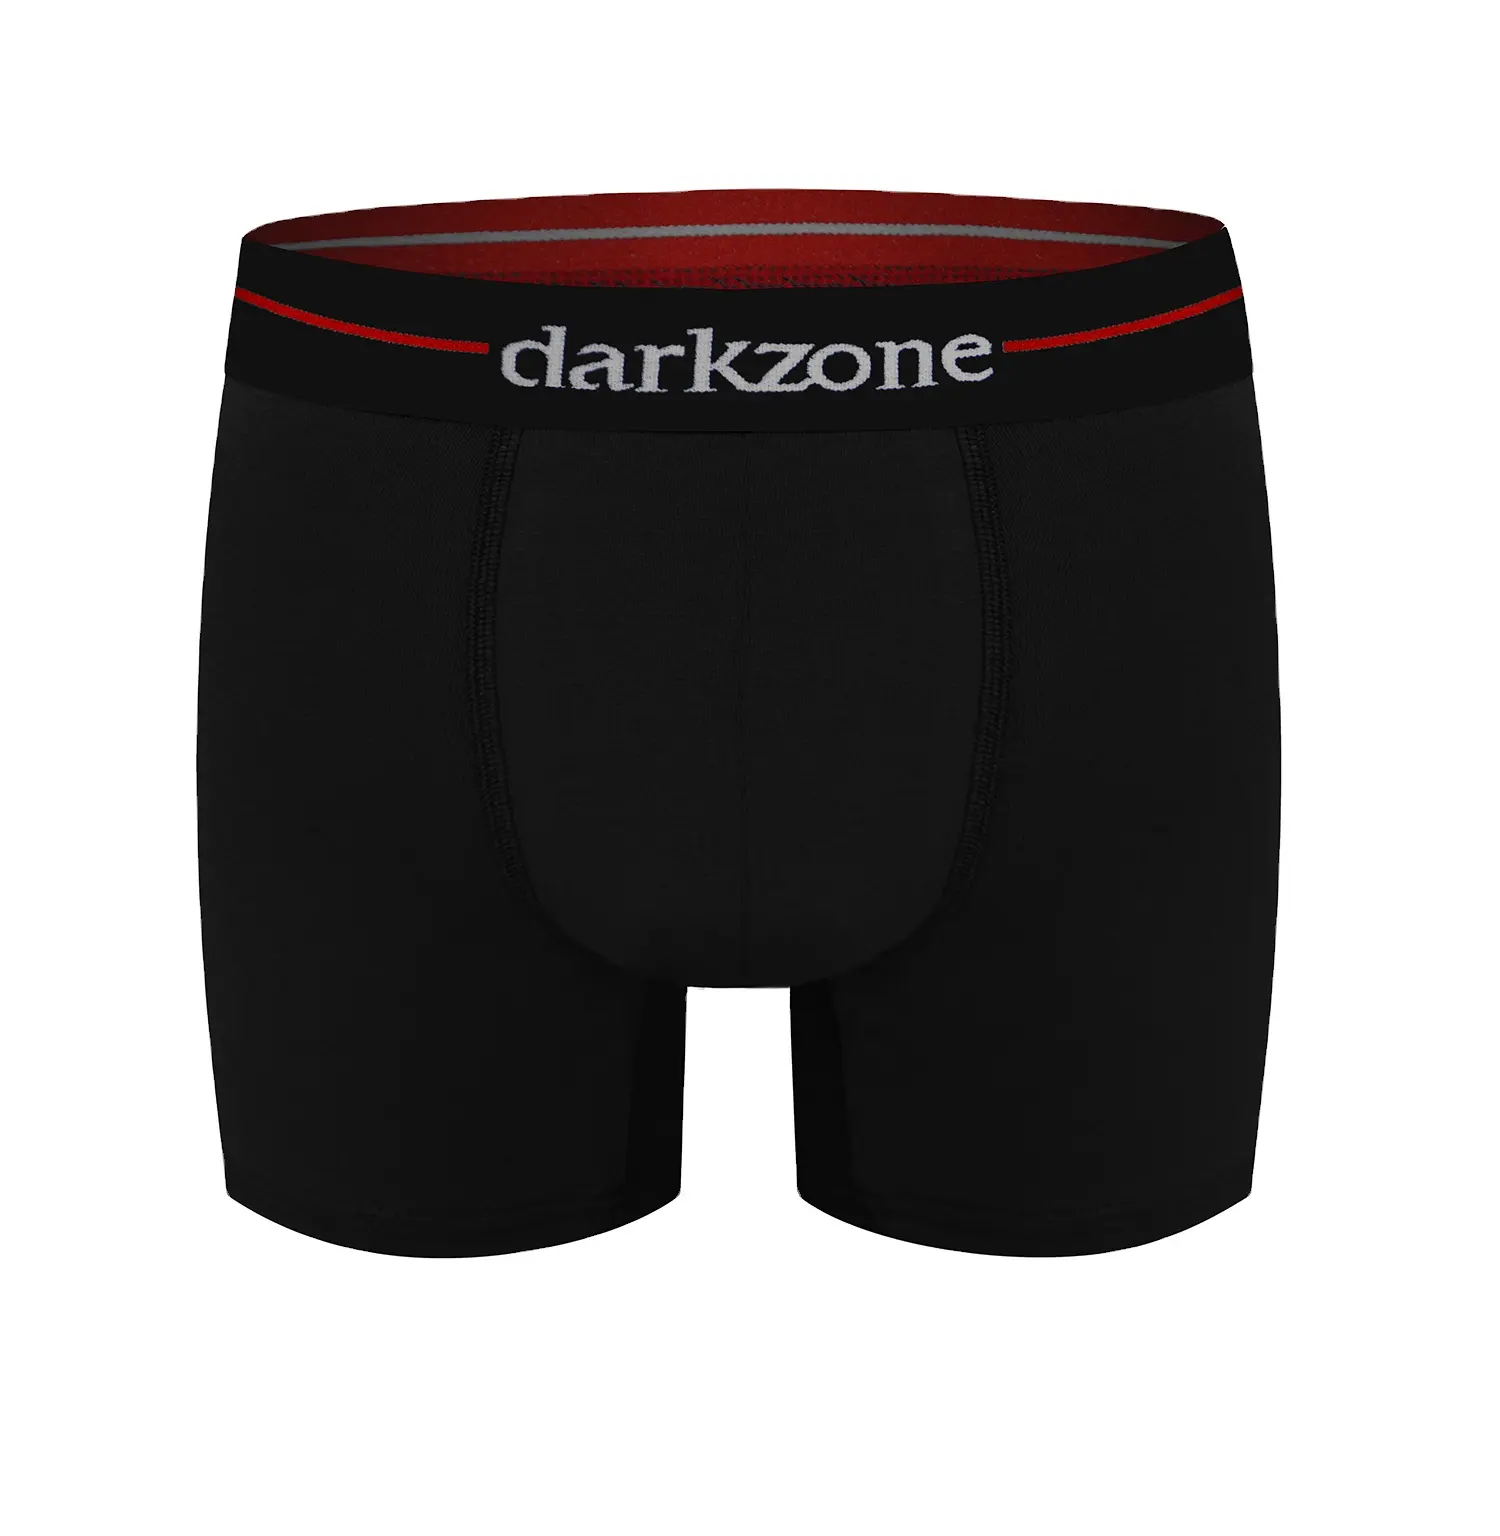 Classic Cotton Boxer Skin Friendly Breathable Comfortable Flexible Darkzone Men's Underwear High Quality